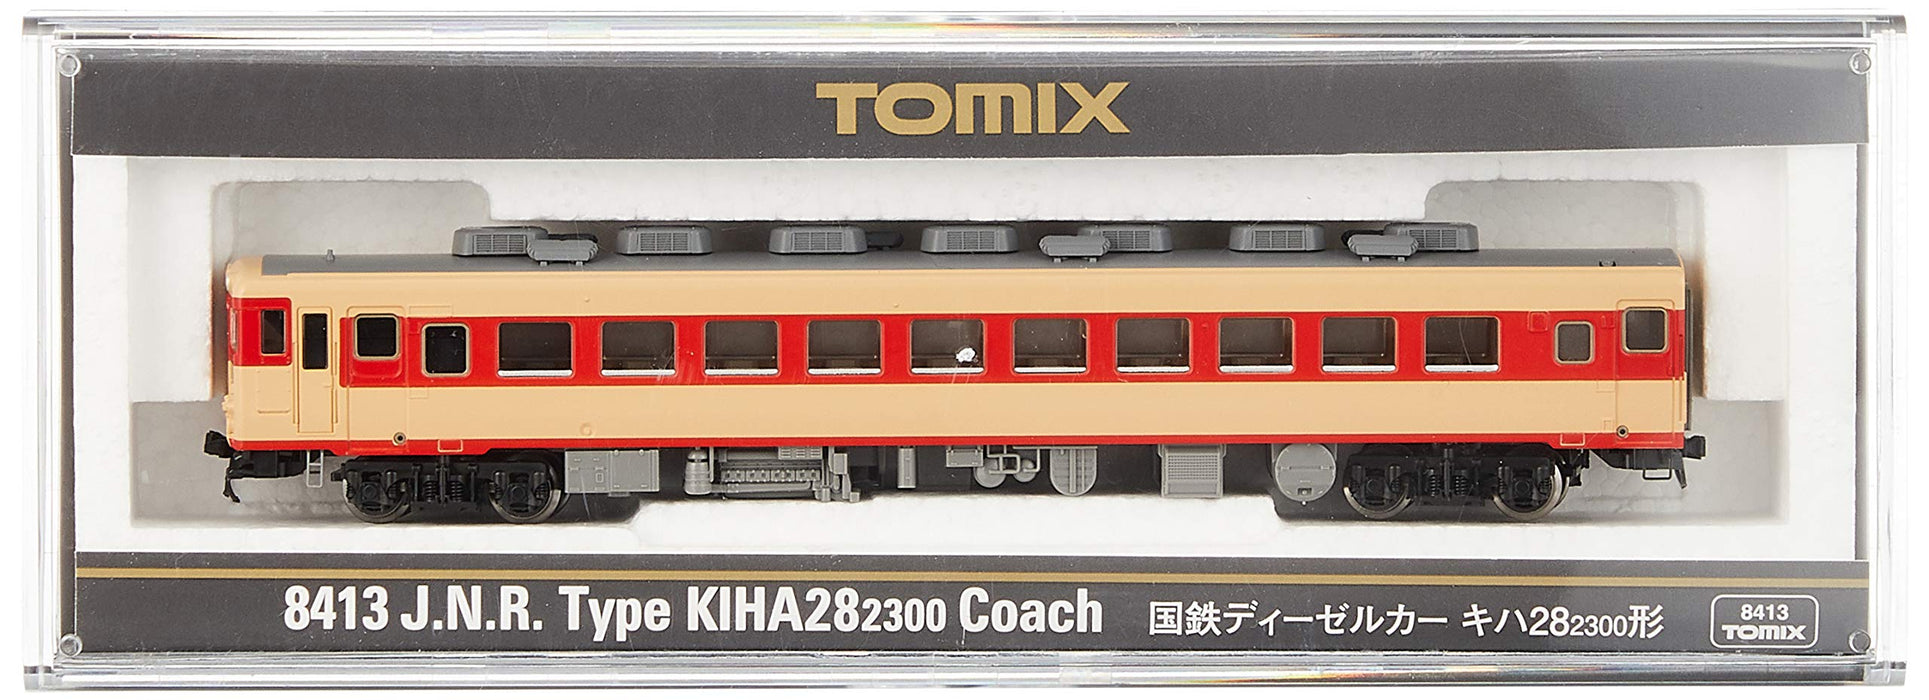 Tomytec Tomix Spur N Kiha28-2300 8413 Modell-Diesel-Eisenbahnwagen